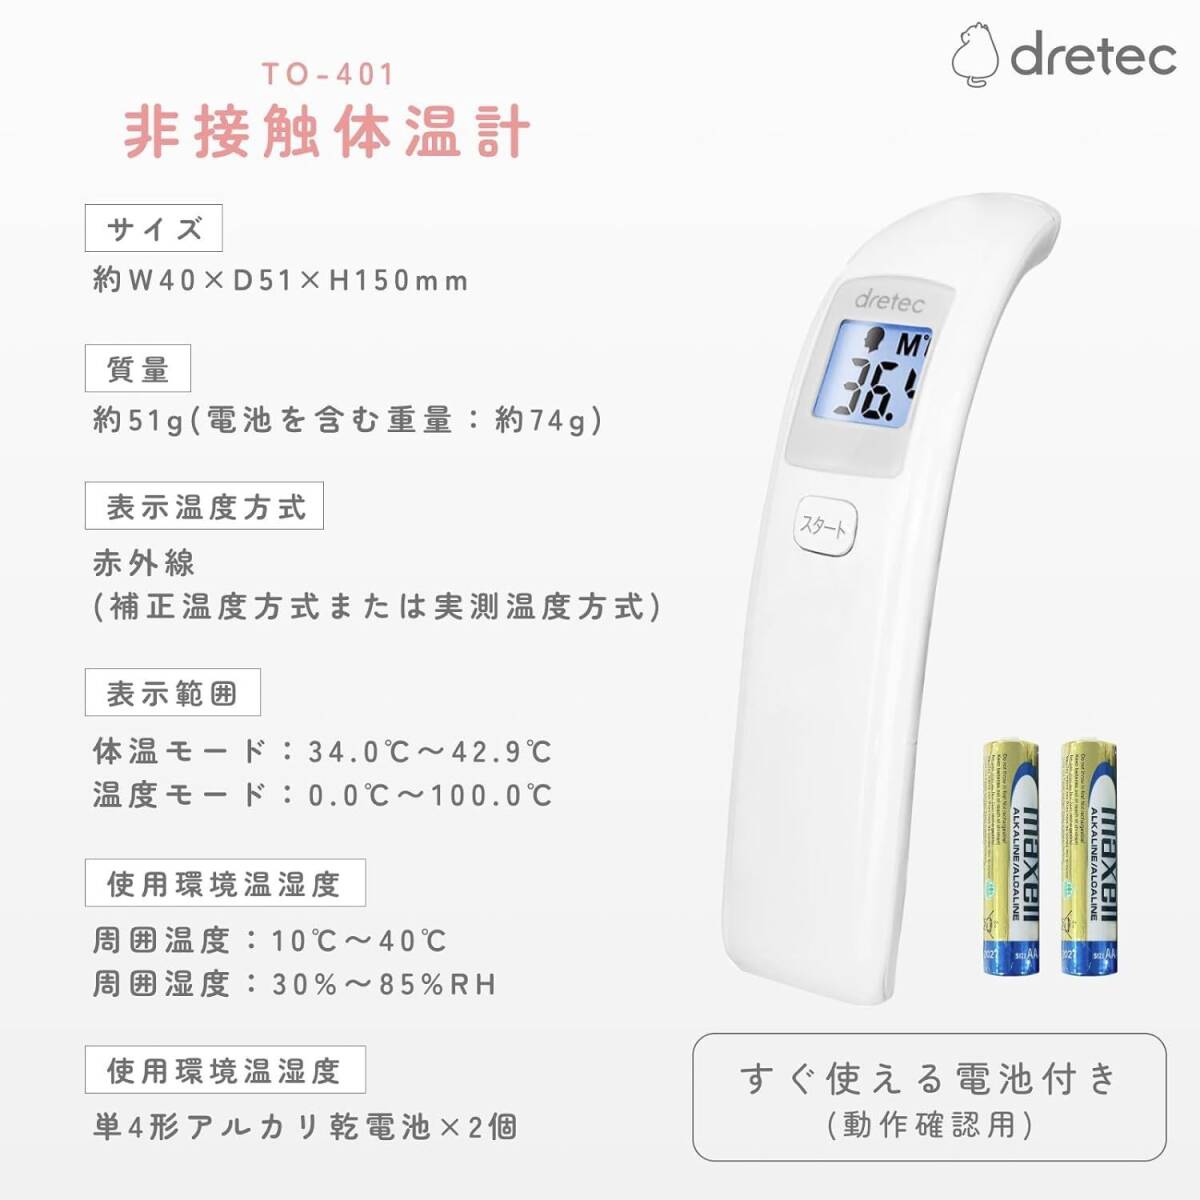 dretec(ドリテック) 非接触体温計 医療機器認証取得 日本メーカー 体温計 赤ちゃん 非接触 1秒測定・ 使用環境温度10〜40℃ TO-401_画像5